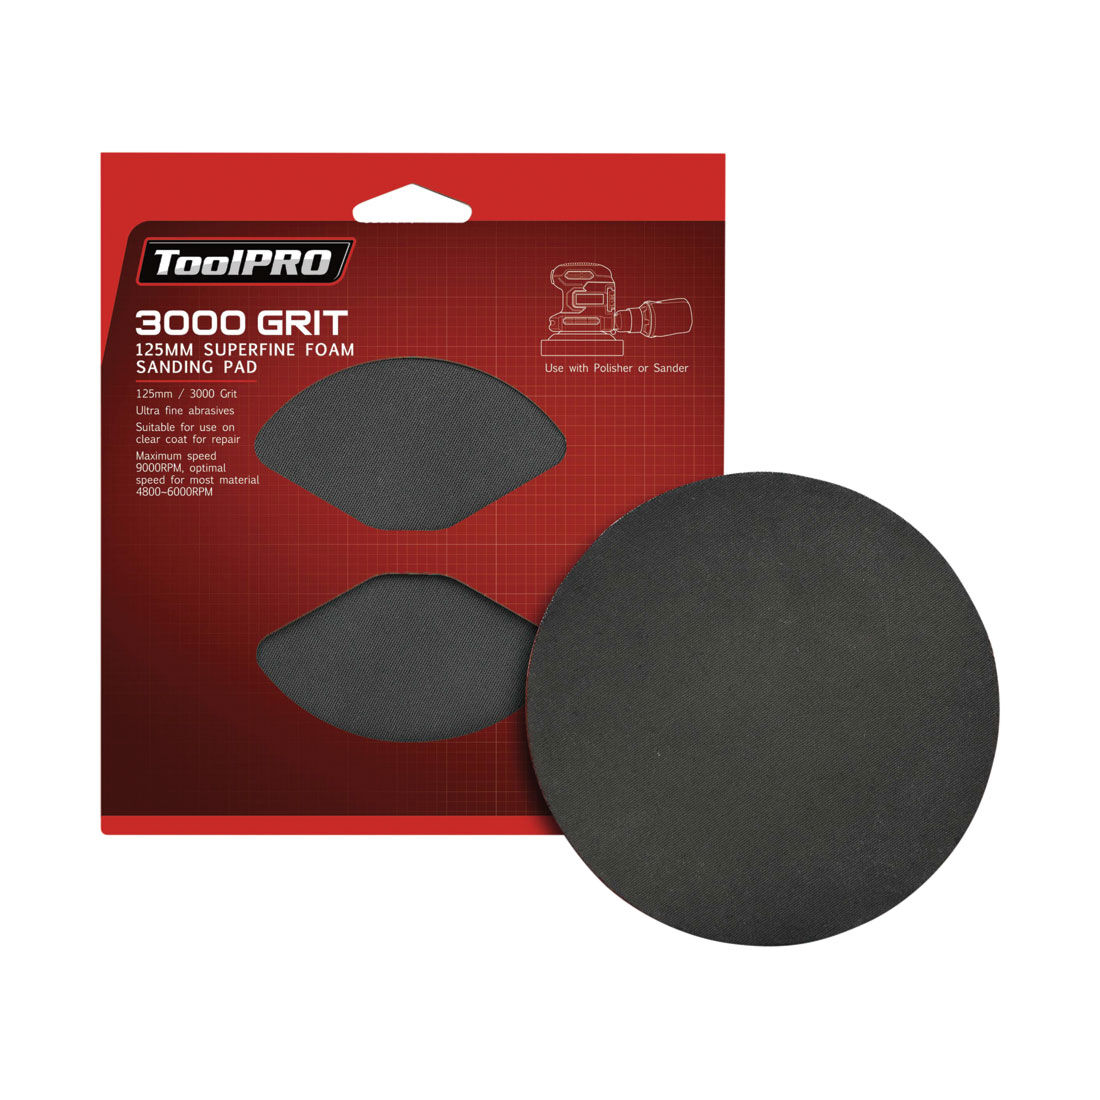 ToolPRO Foam Disc Superfine 125mm 3000 Grit, , scaau_hi-res